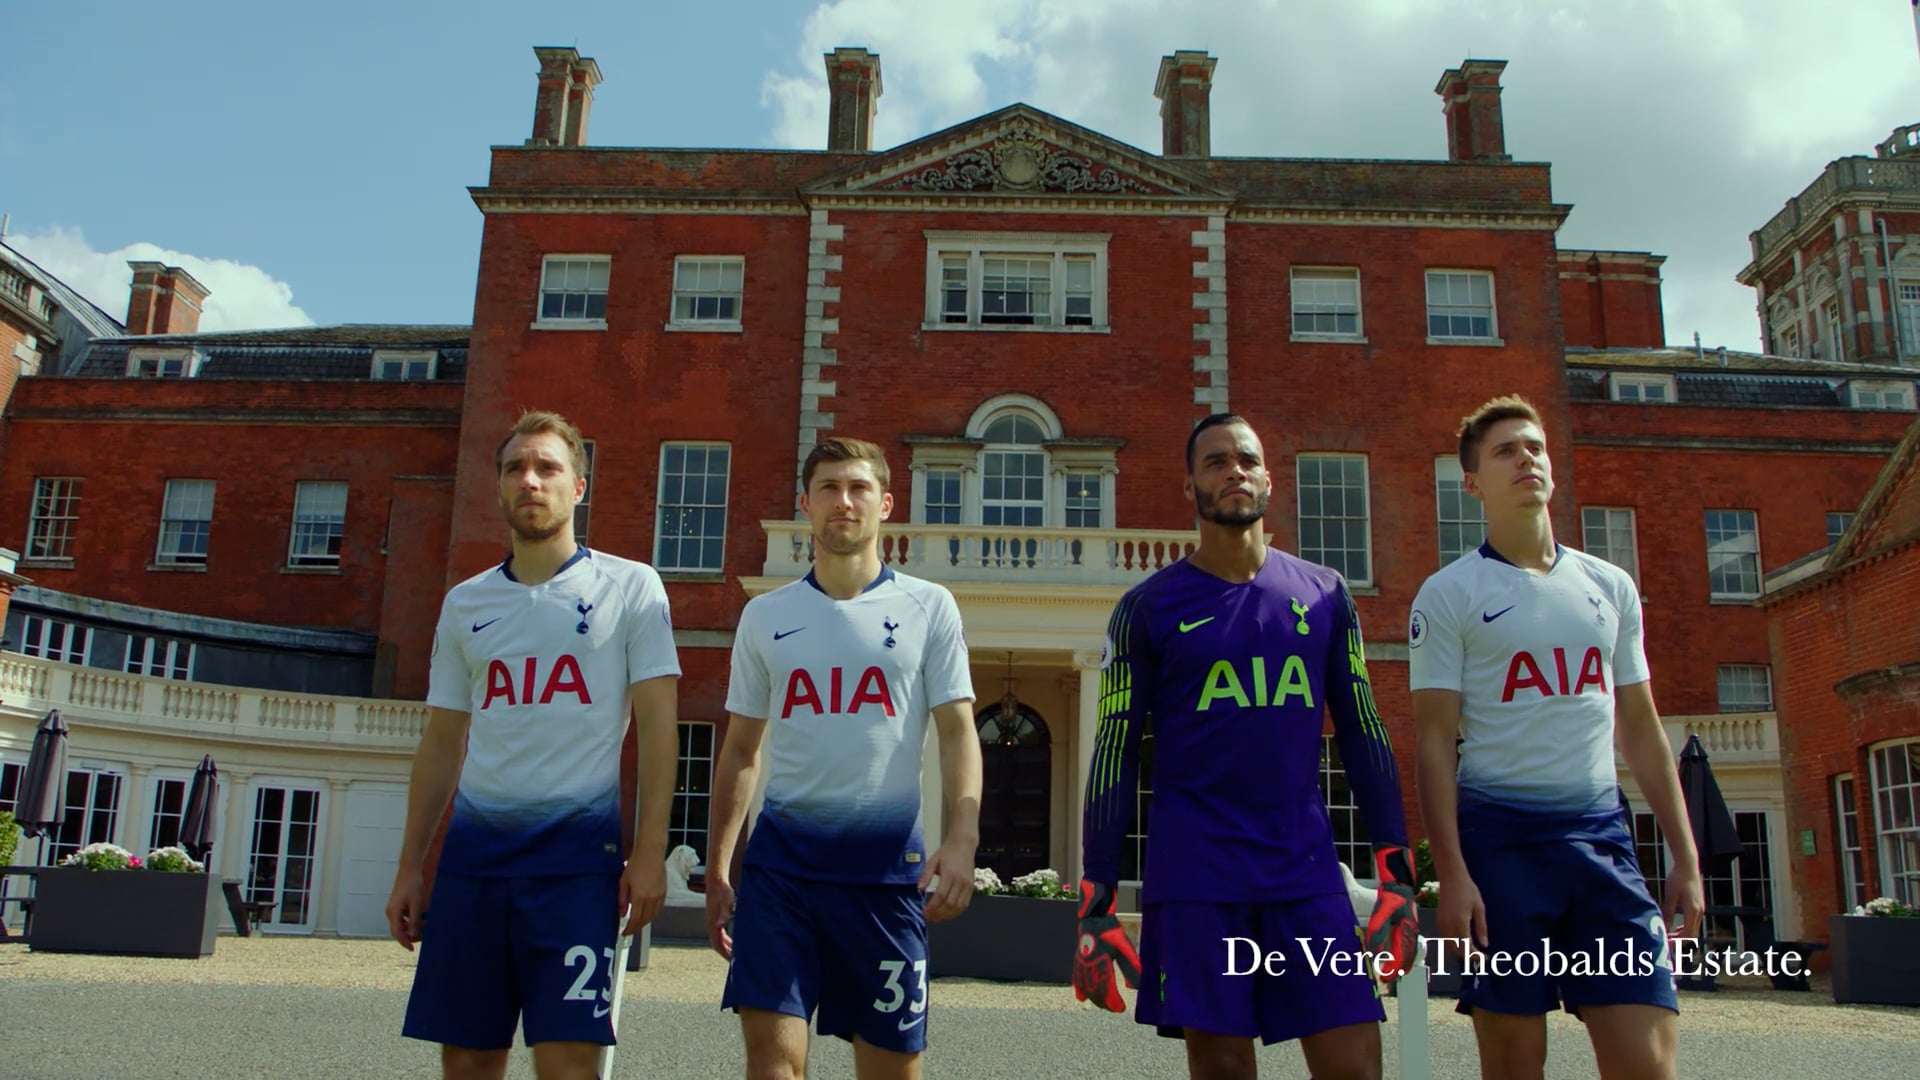 Hotels.com | "Tottenham Hotspurs Hotel Academy"